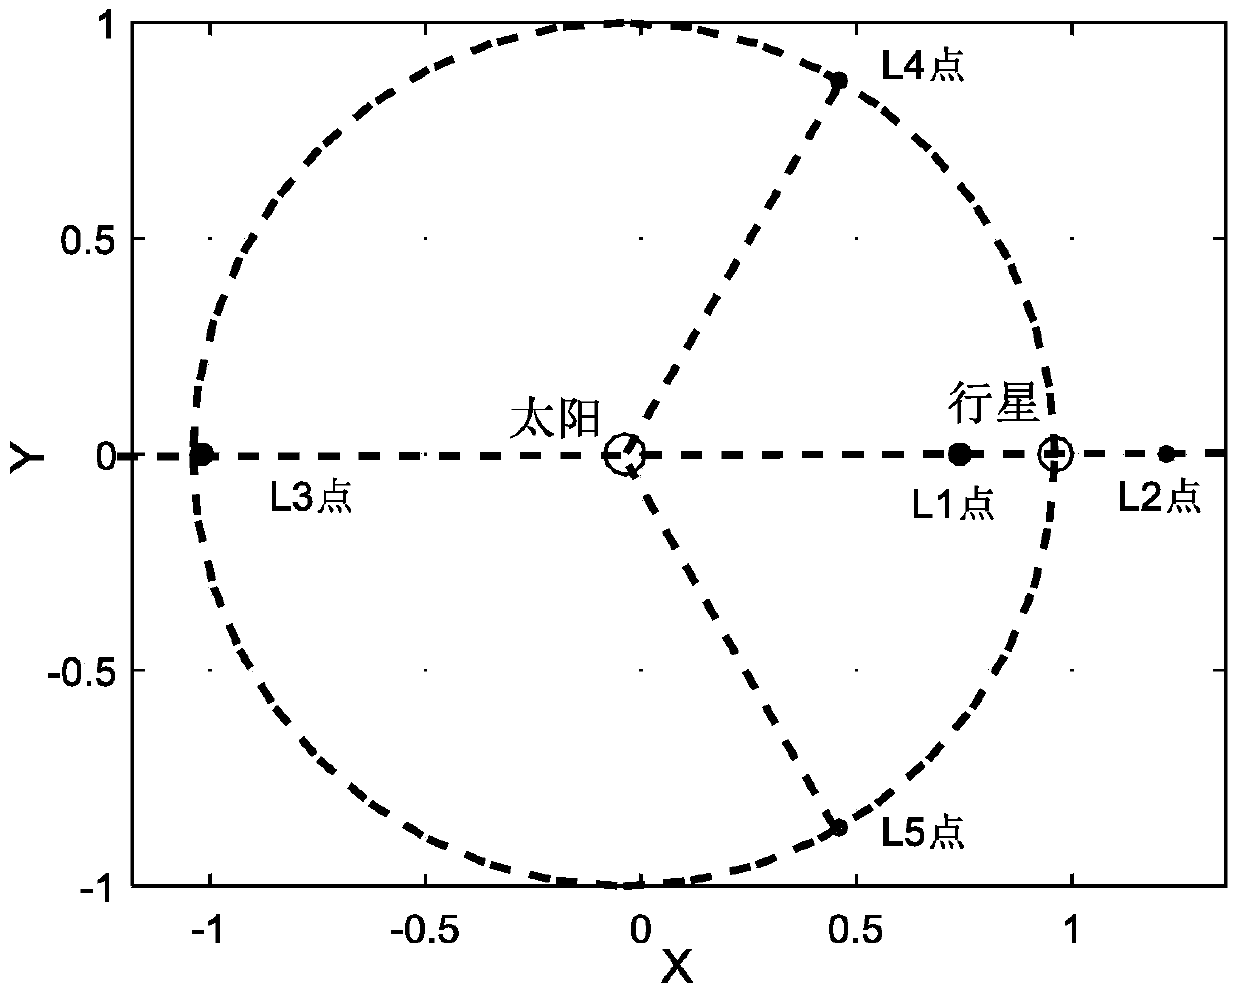 A planetary low energy transfer orbit method based on equilibrium point periodic orbit